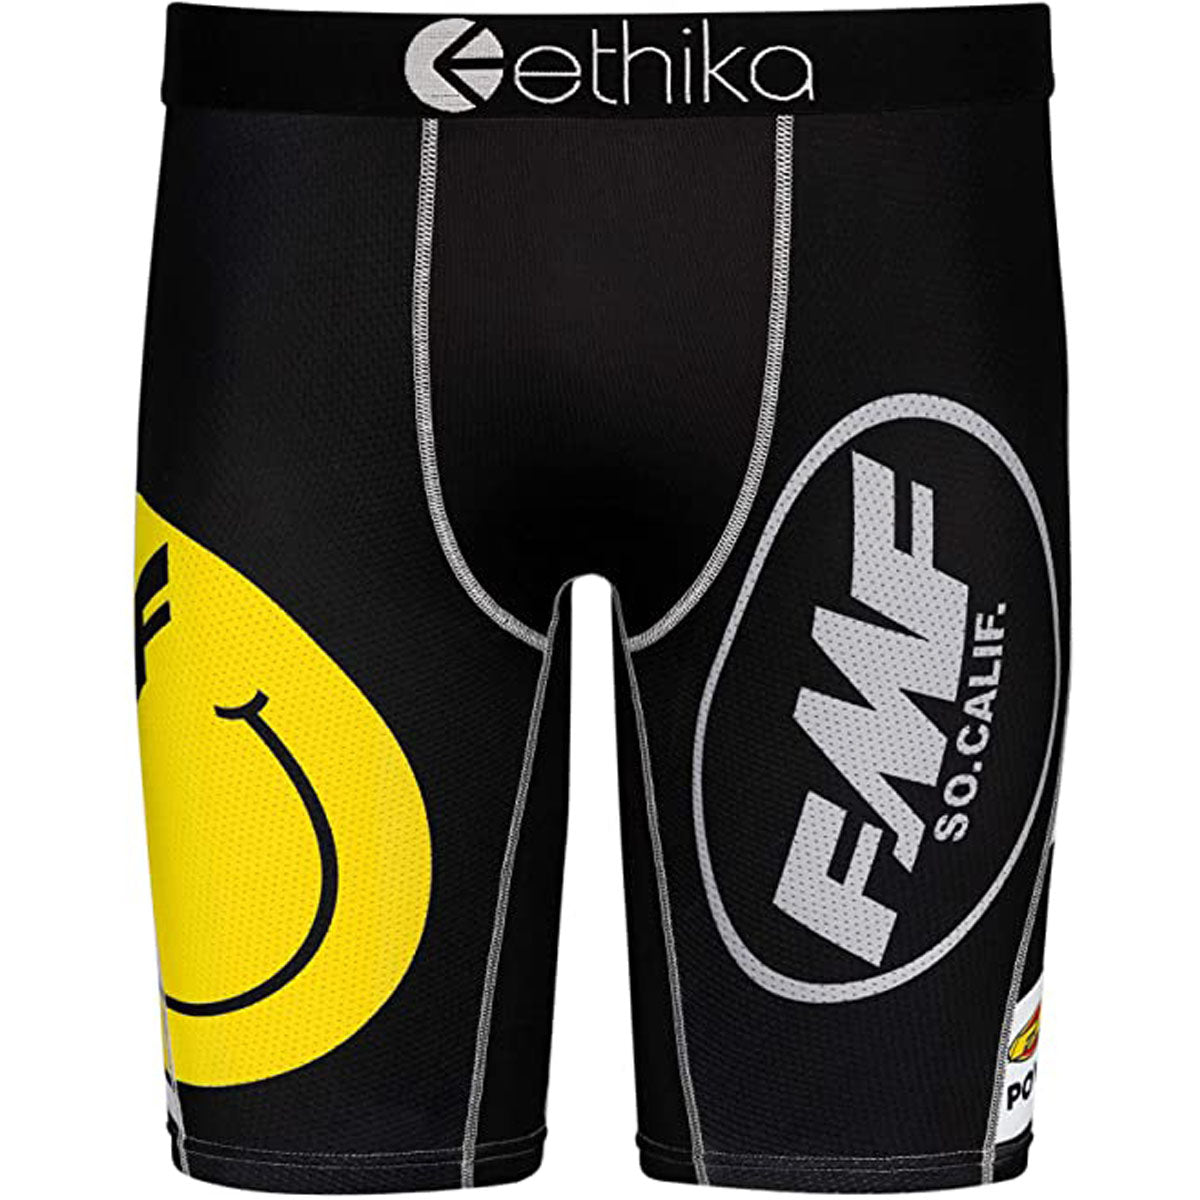 Ethika The Staple FMF WFO Underwear - ExtremeSupply.com